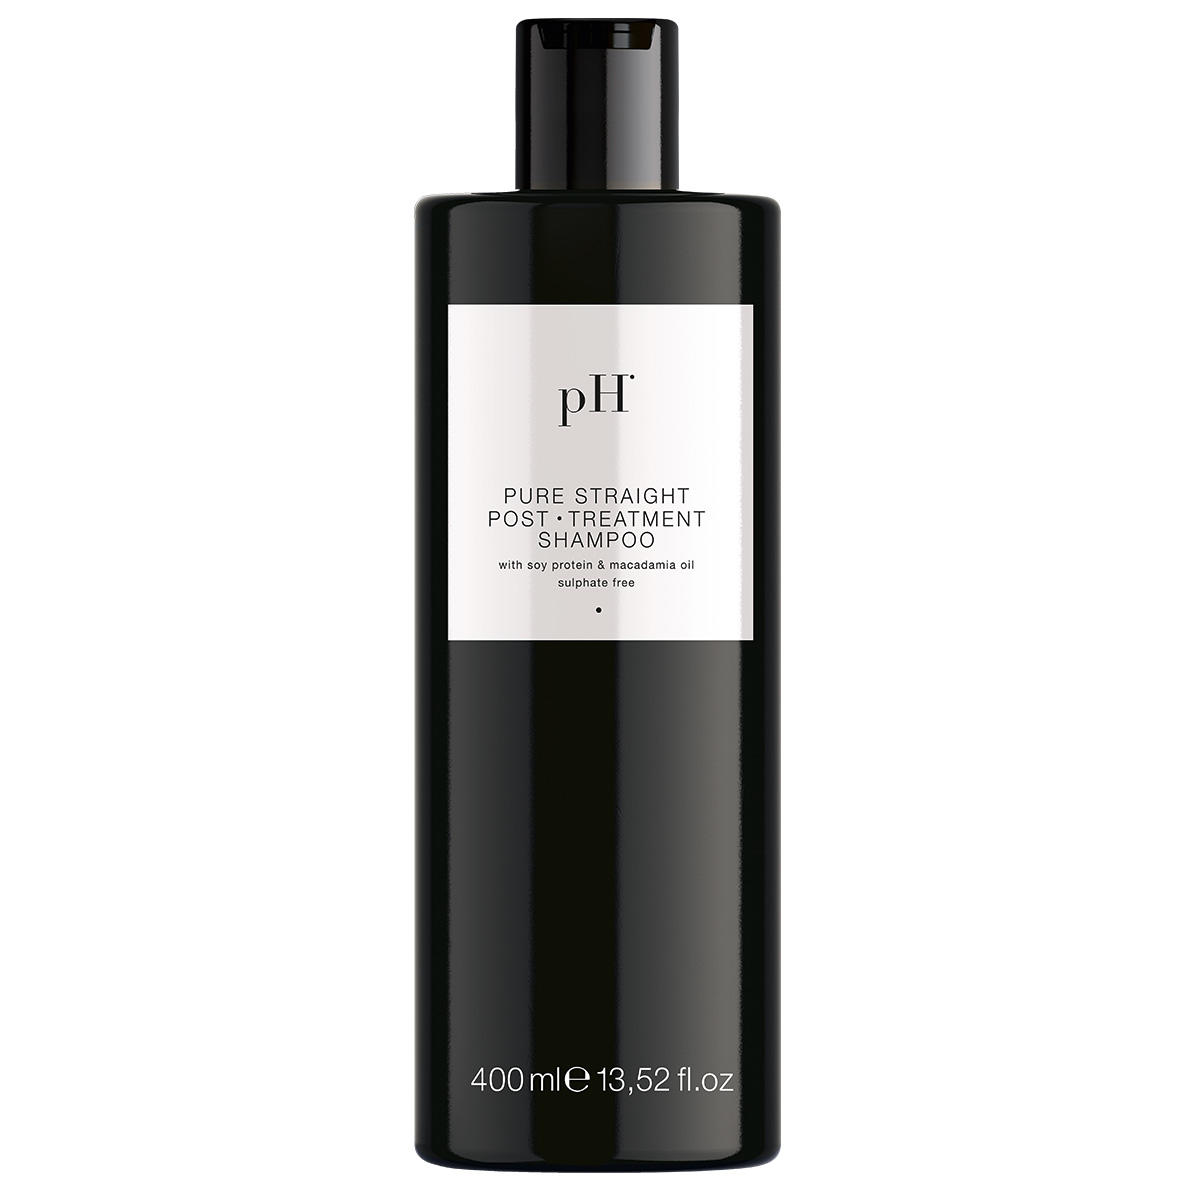 pH Pure Straight Post-Treatment Shampoo 400 ml - 1